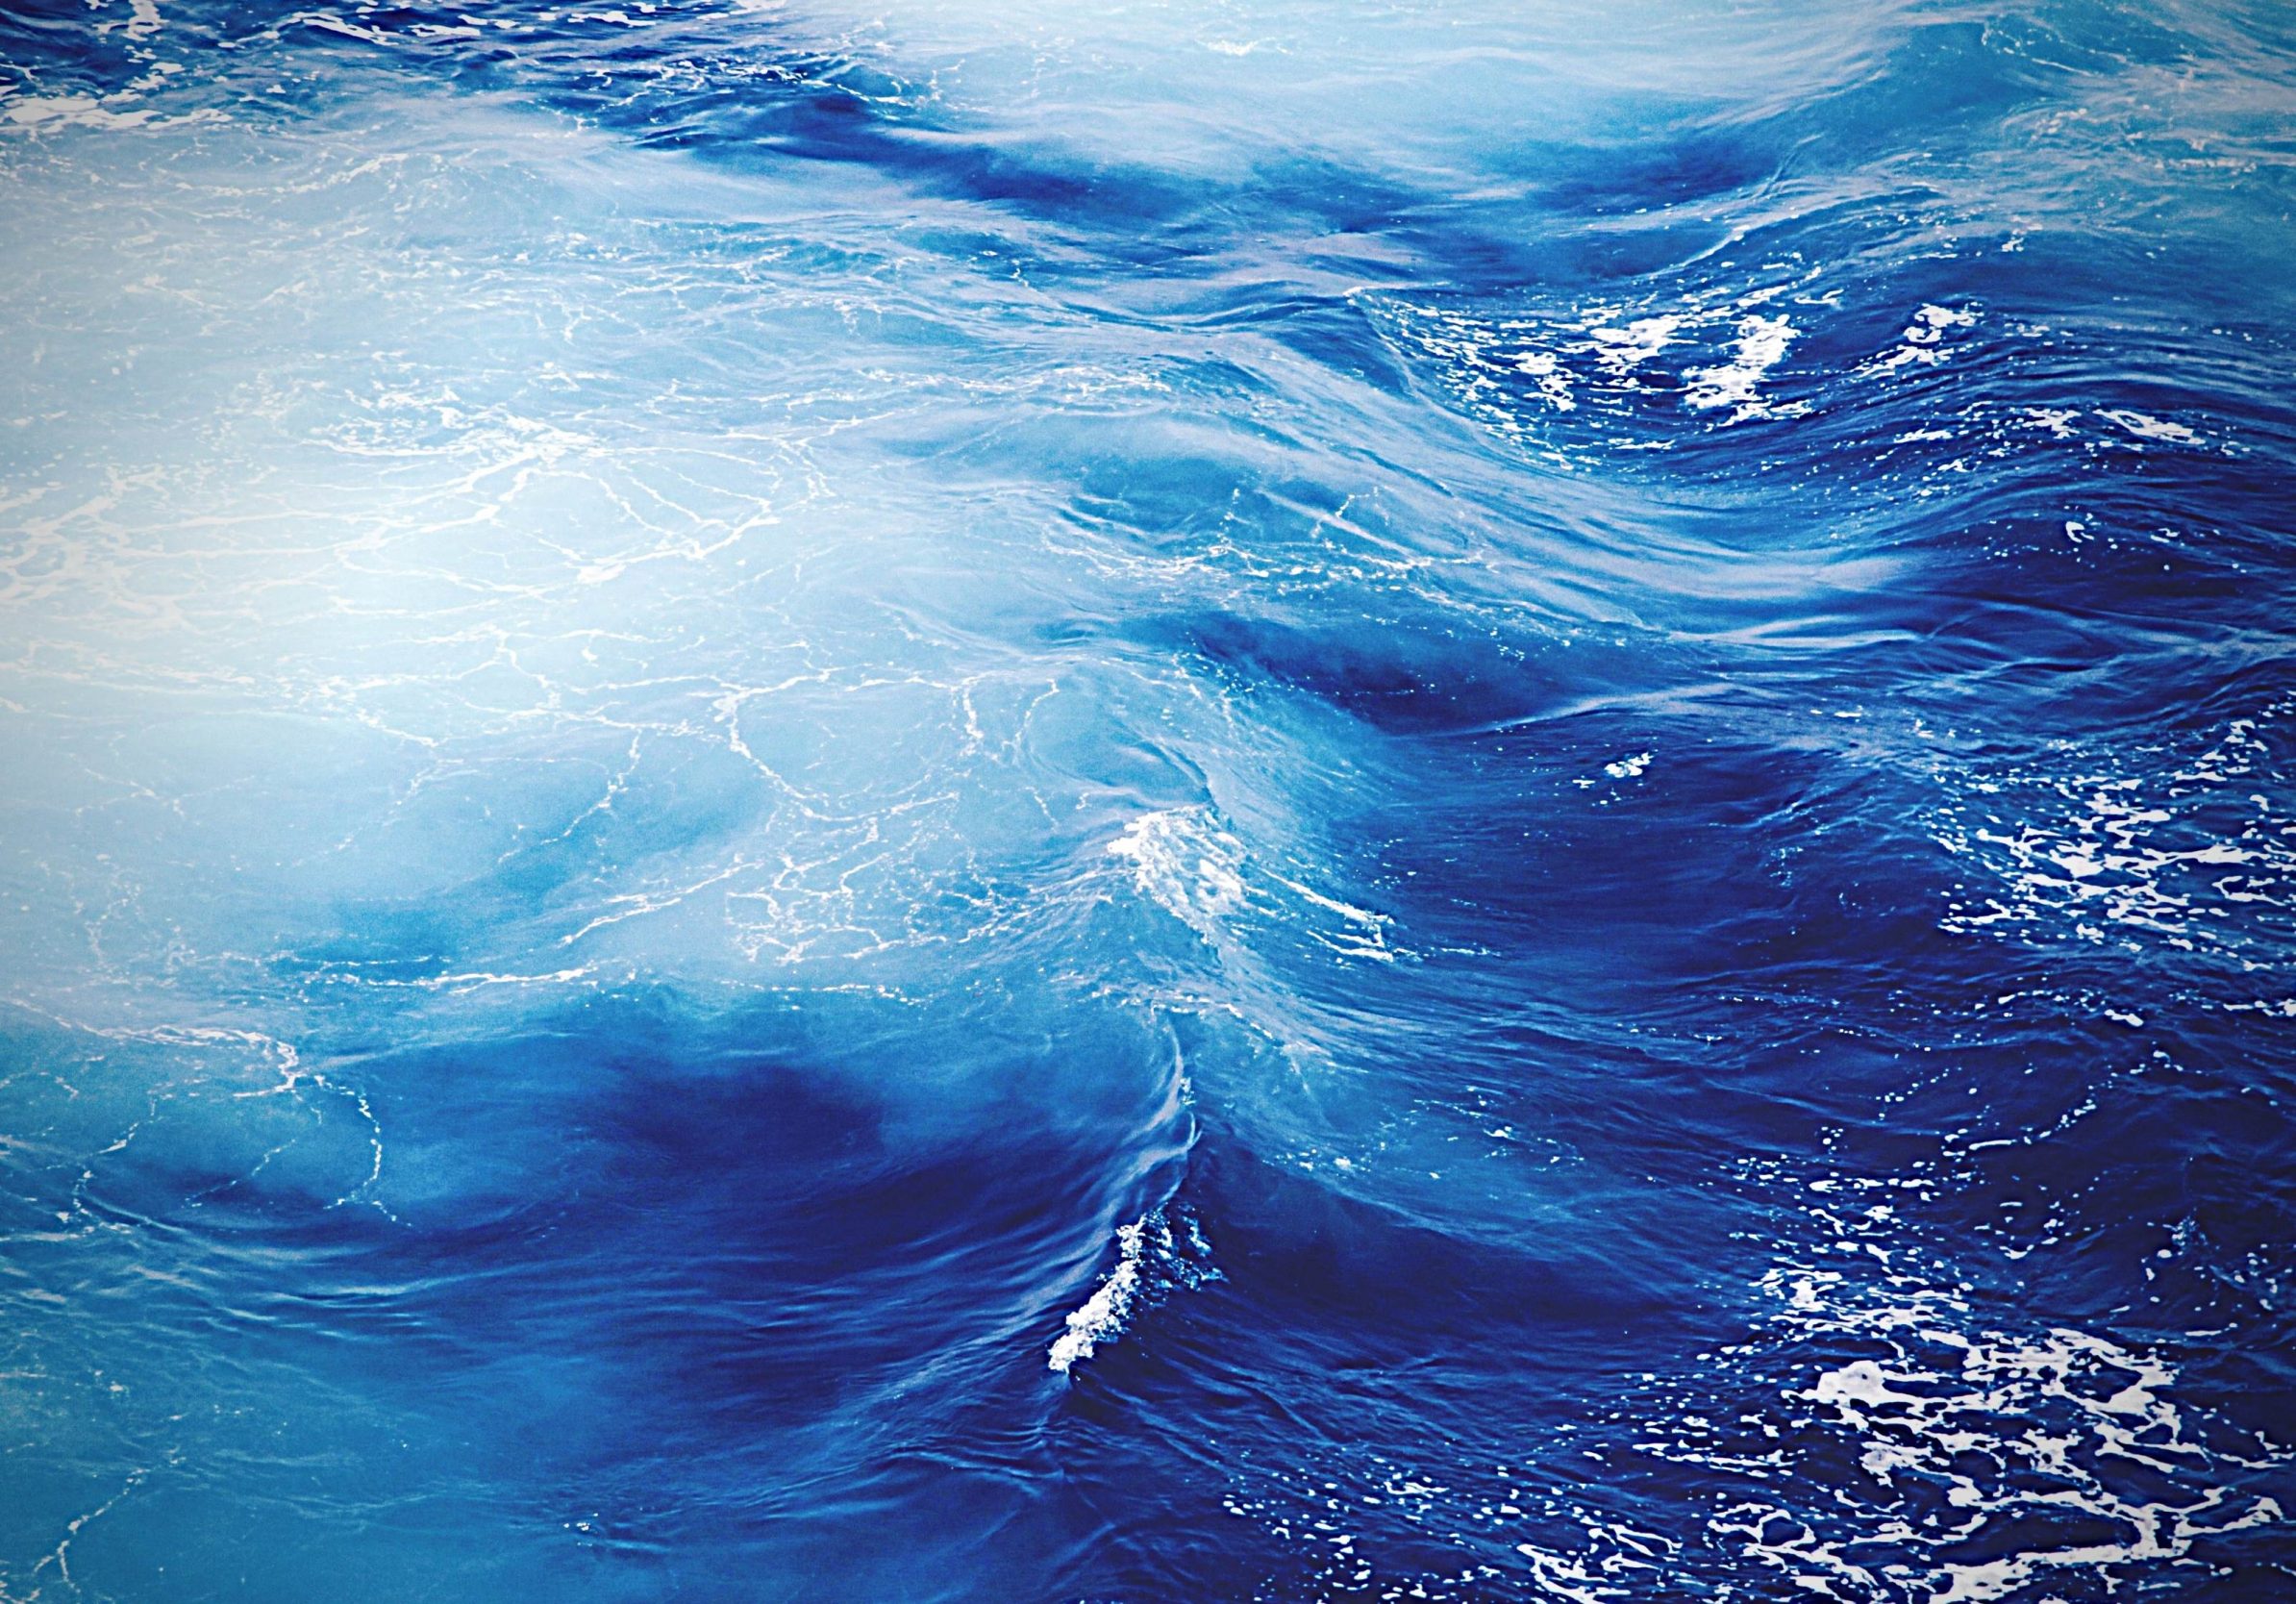 2388x1668 iPad Pro wallpapers Ocean Sea Water Wave Blue iPad Wallpaper 2388x1668 pixels resolution